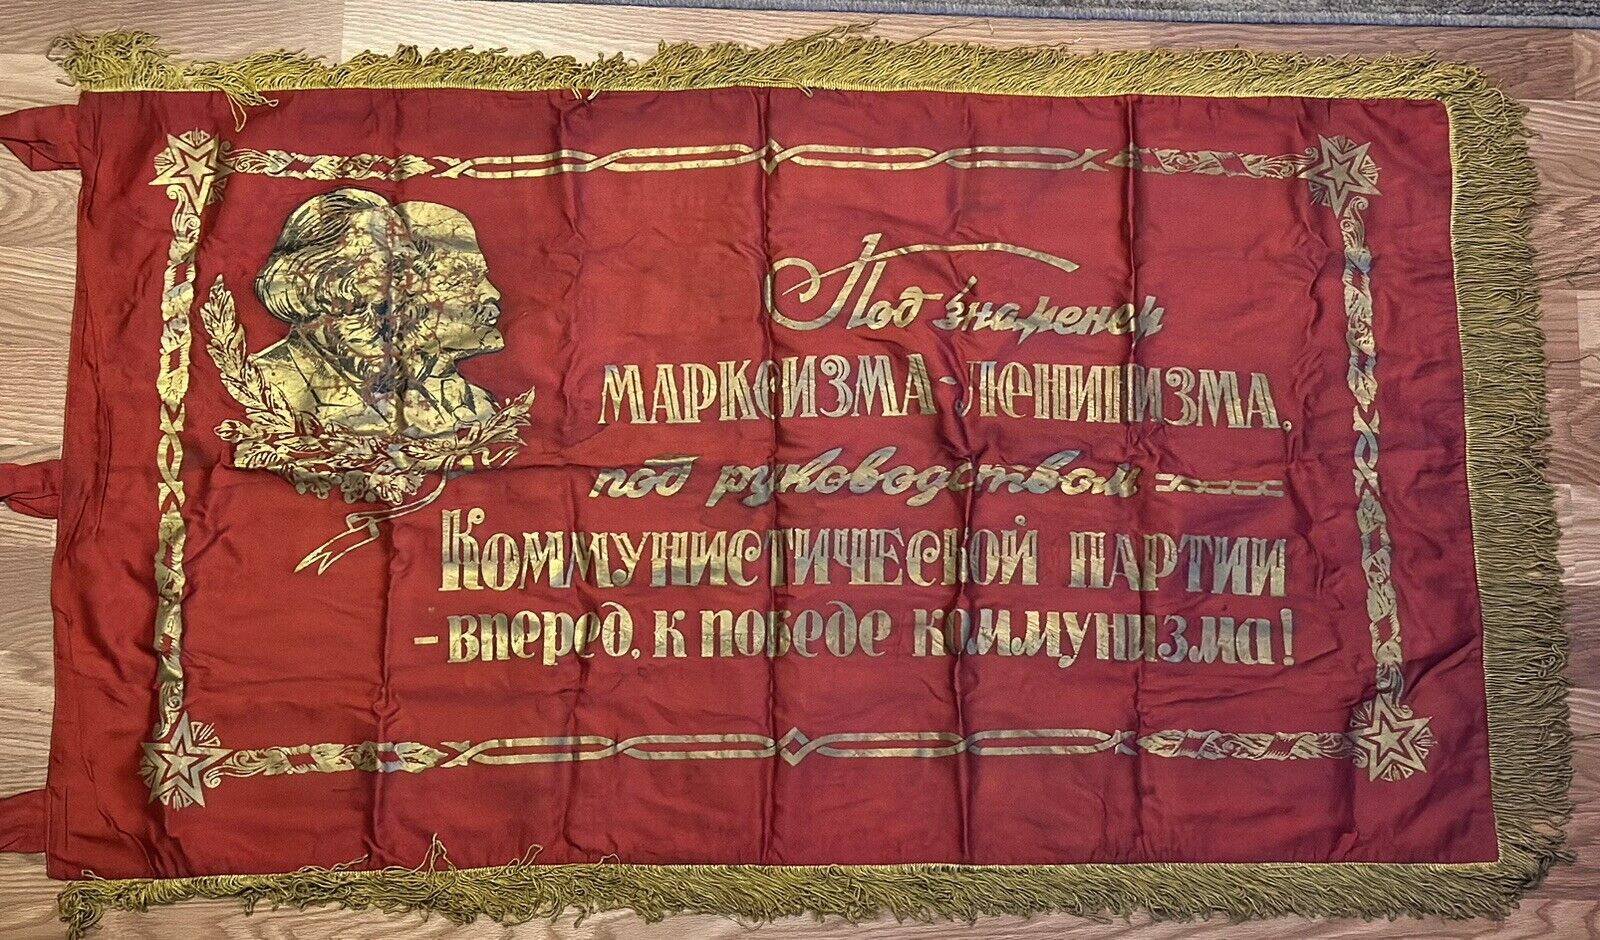 Authentic Vintage USSR Russia Lenin Propaganda Flag Banner.